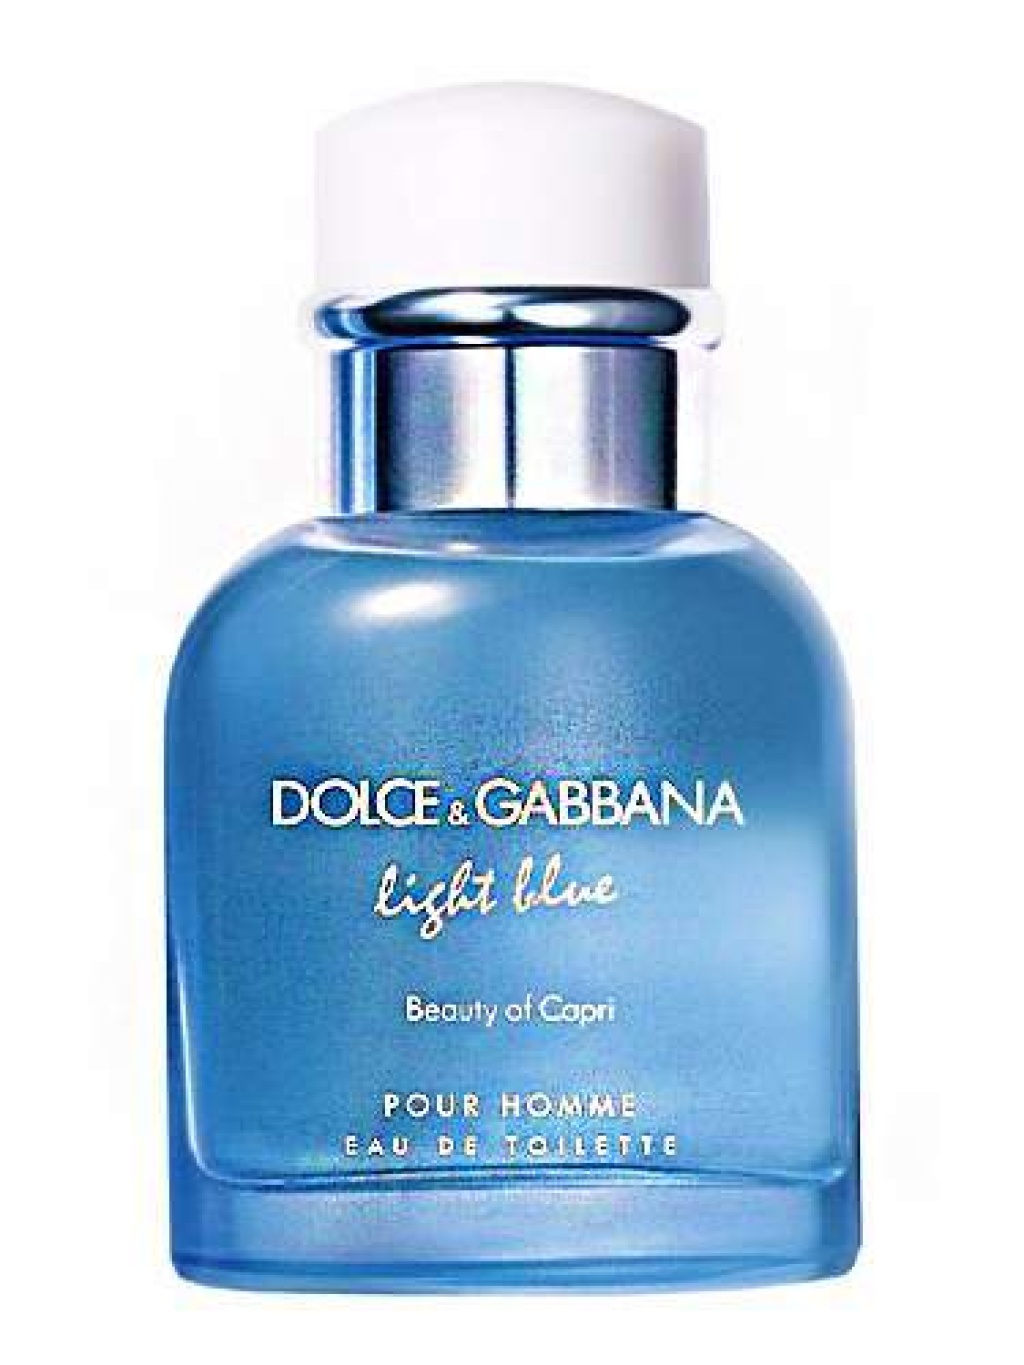 Light blue forever pour homme dolce gabbana